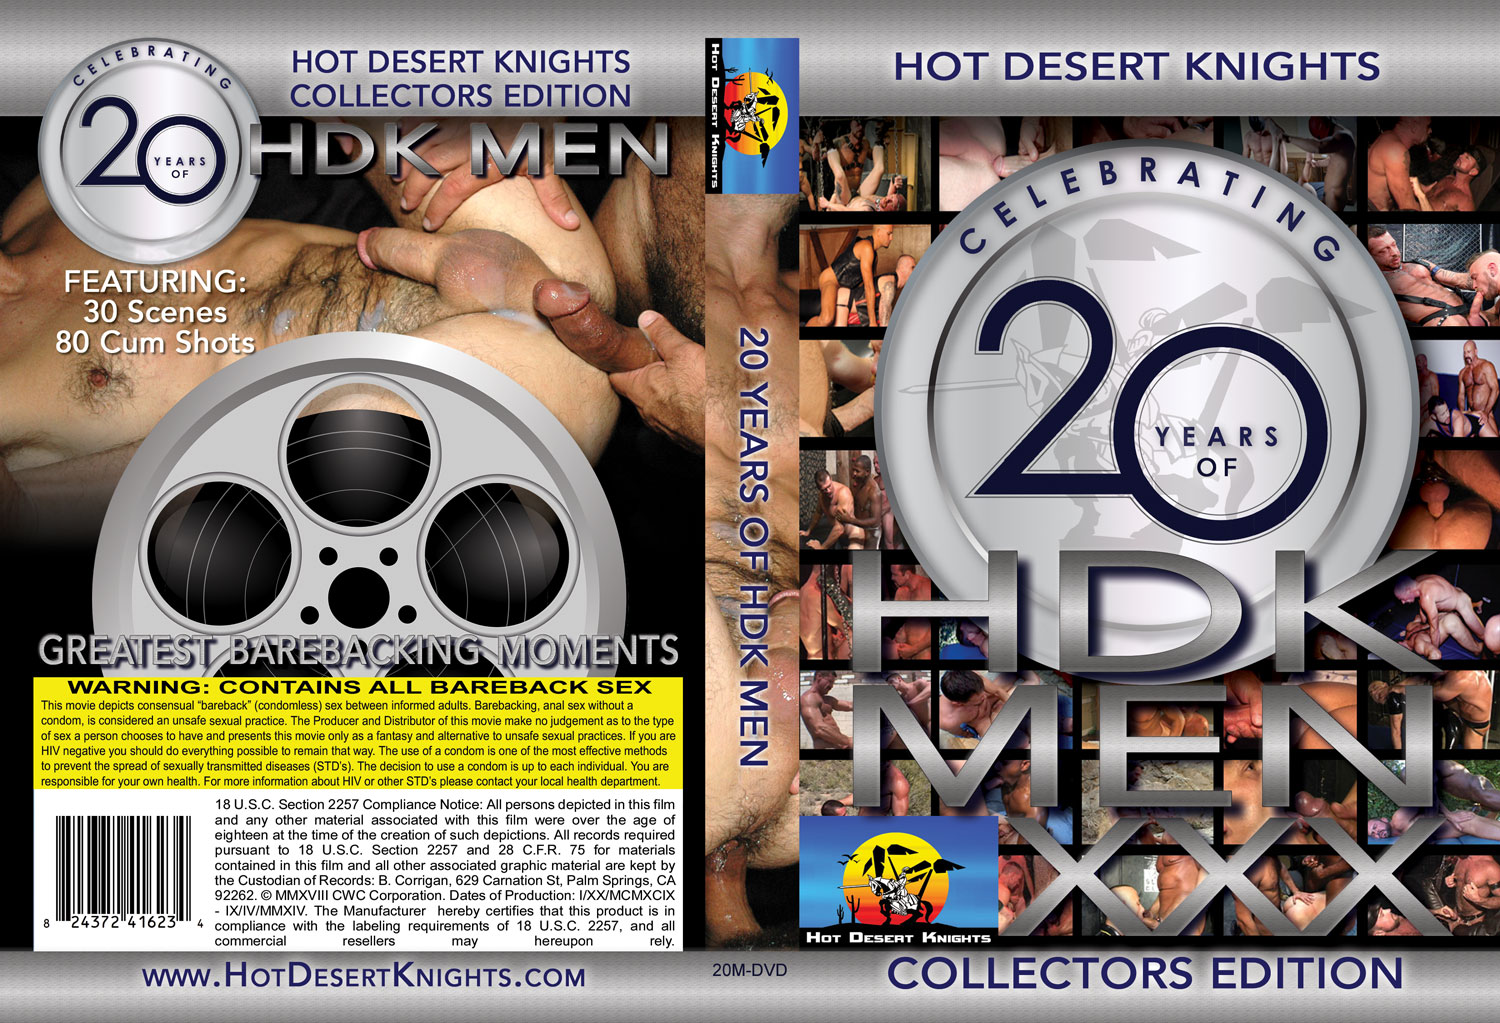 HDK Movie: 20 YEARS OF HDK MEN